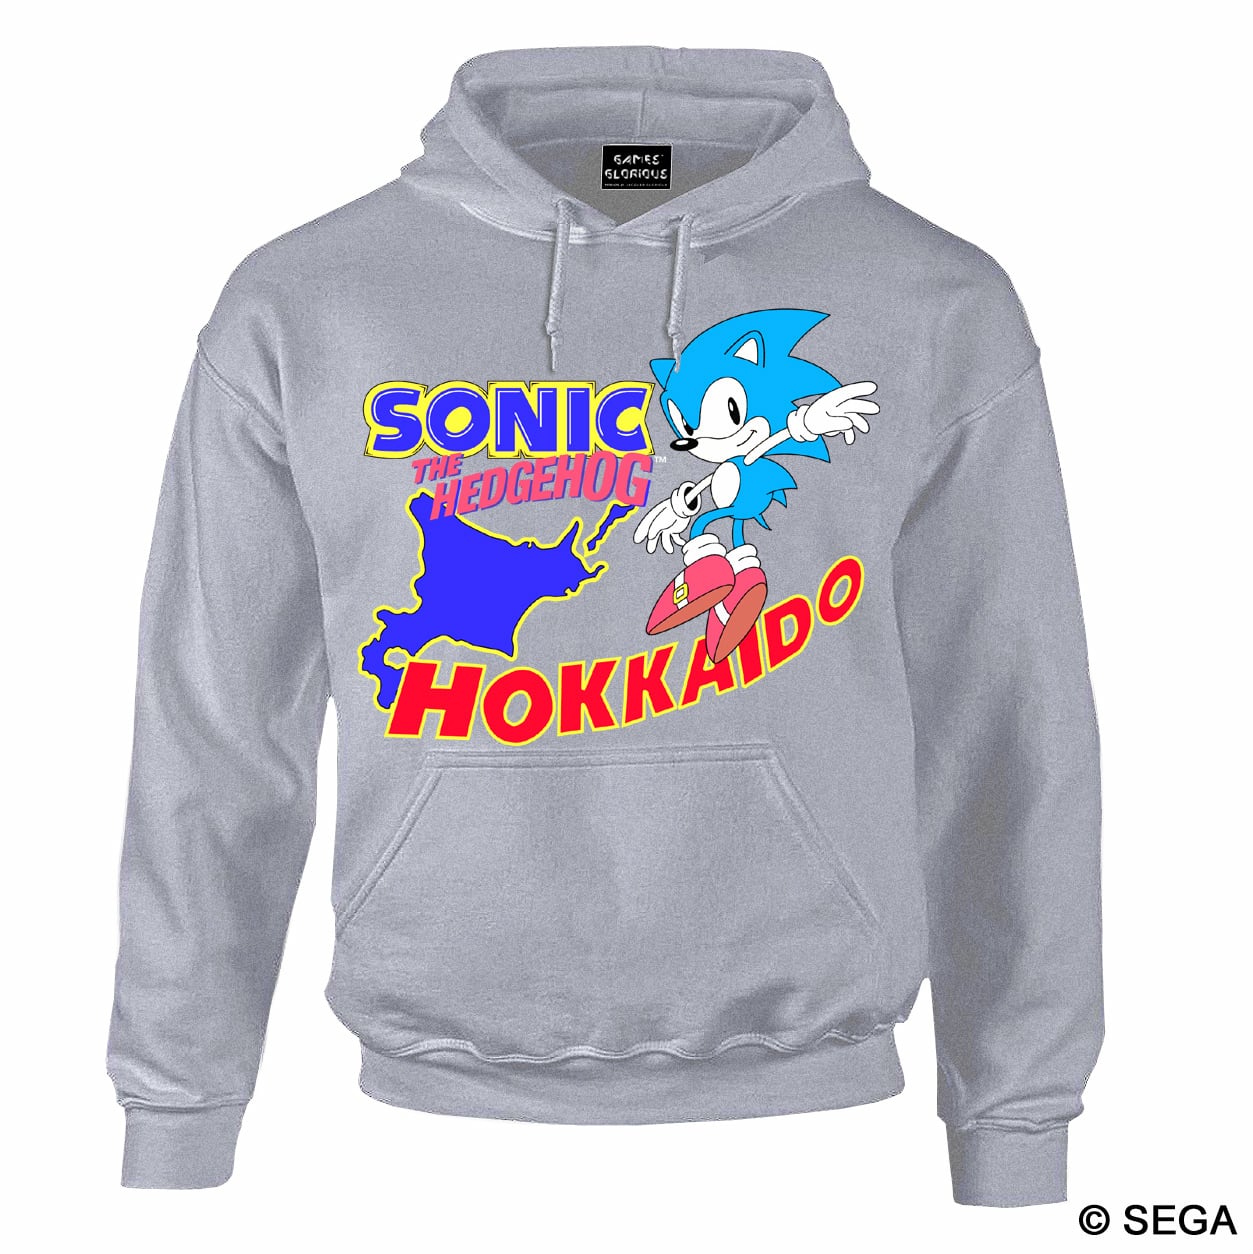 SONIC THE HEDGEHOG x HOKKAIDO パーカー / 全3色